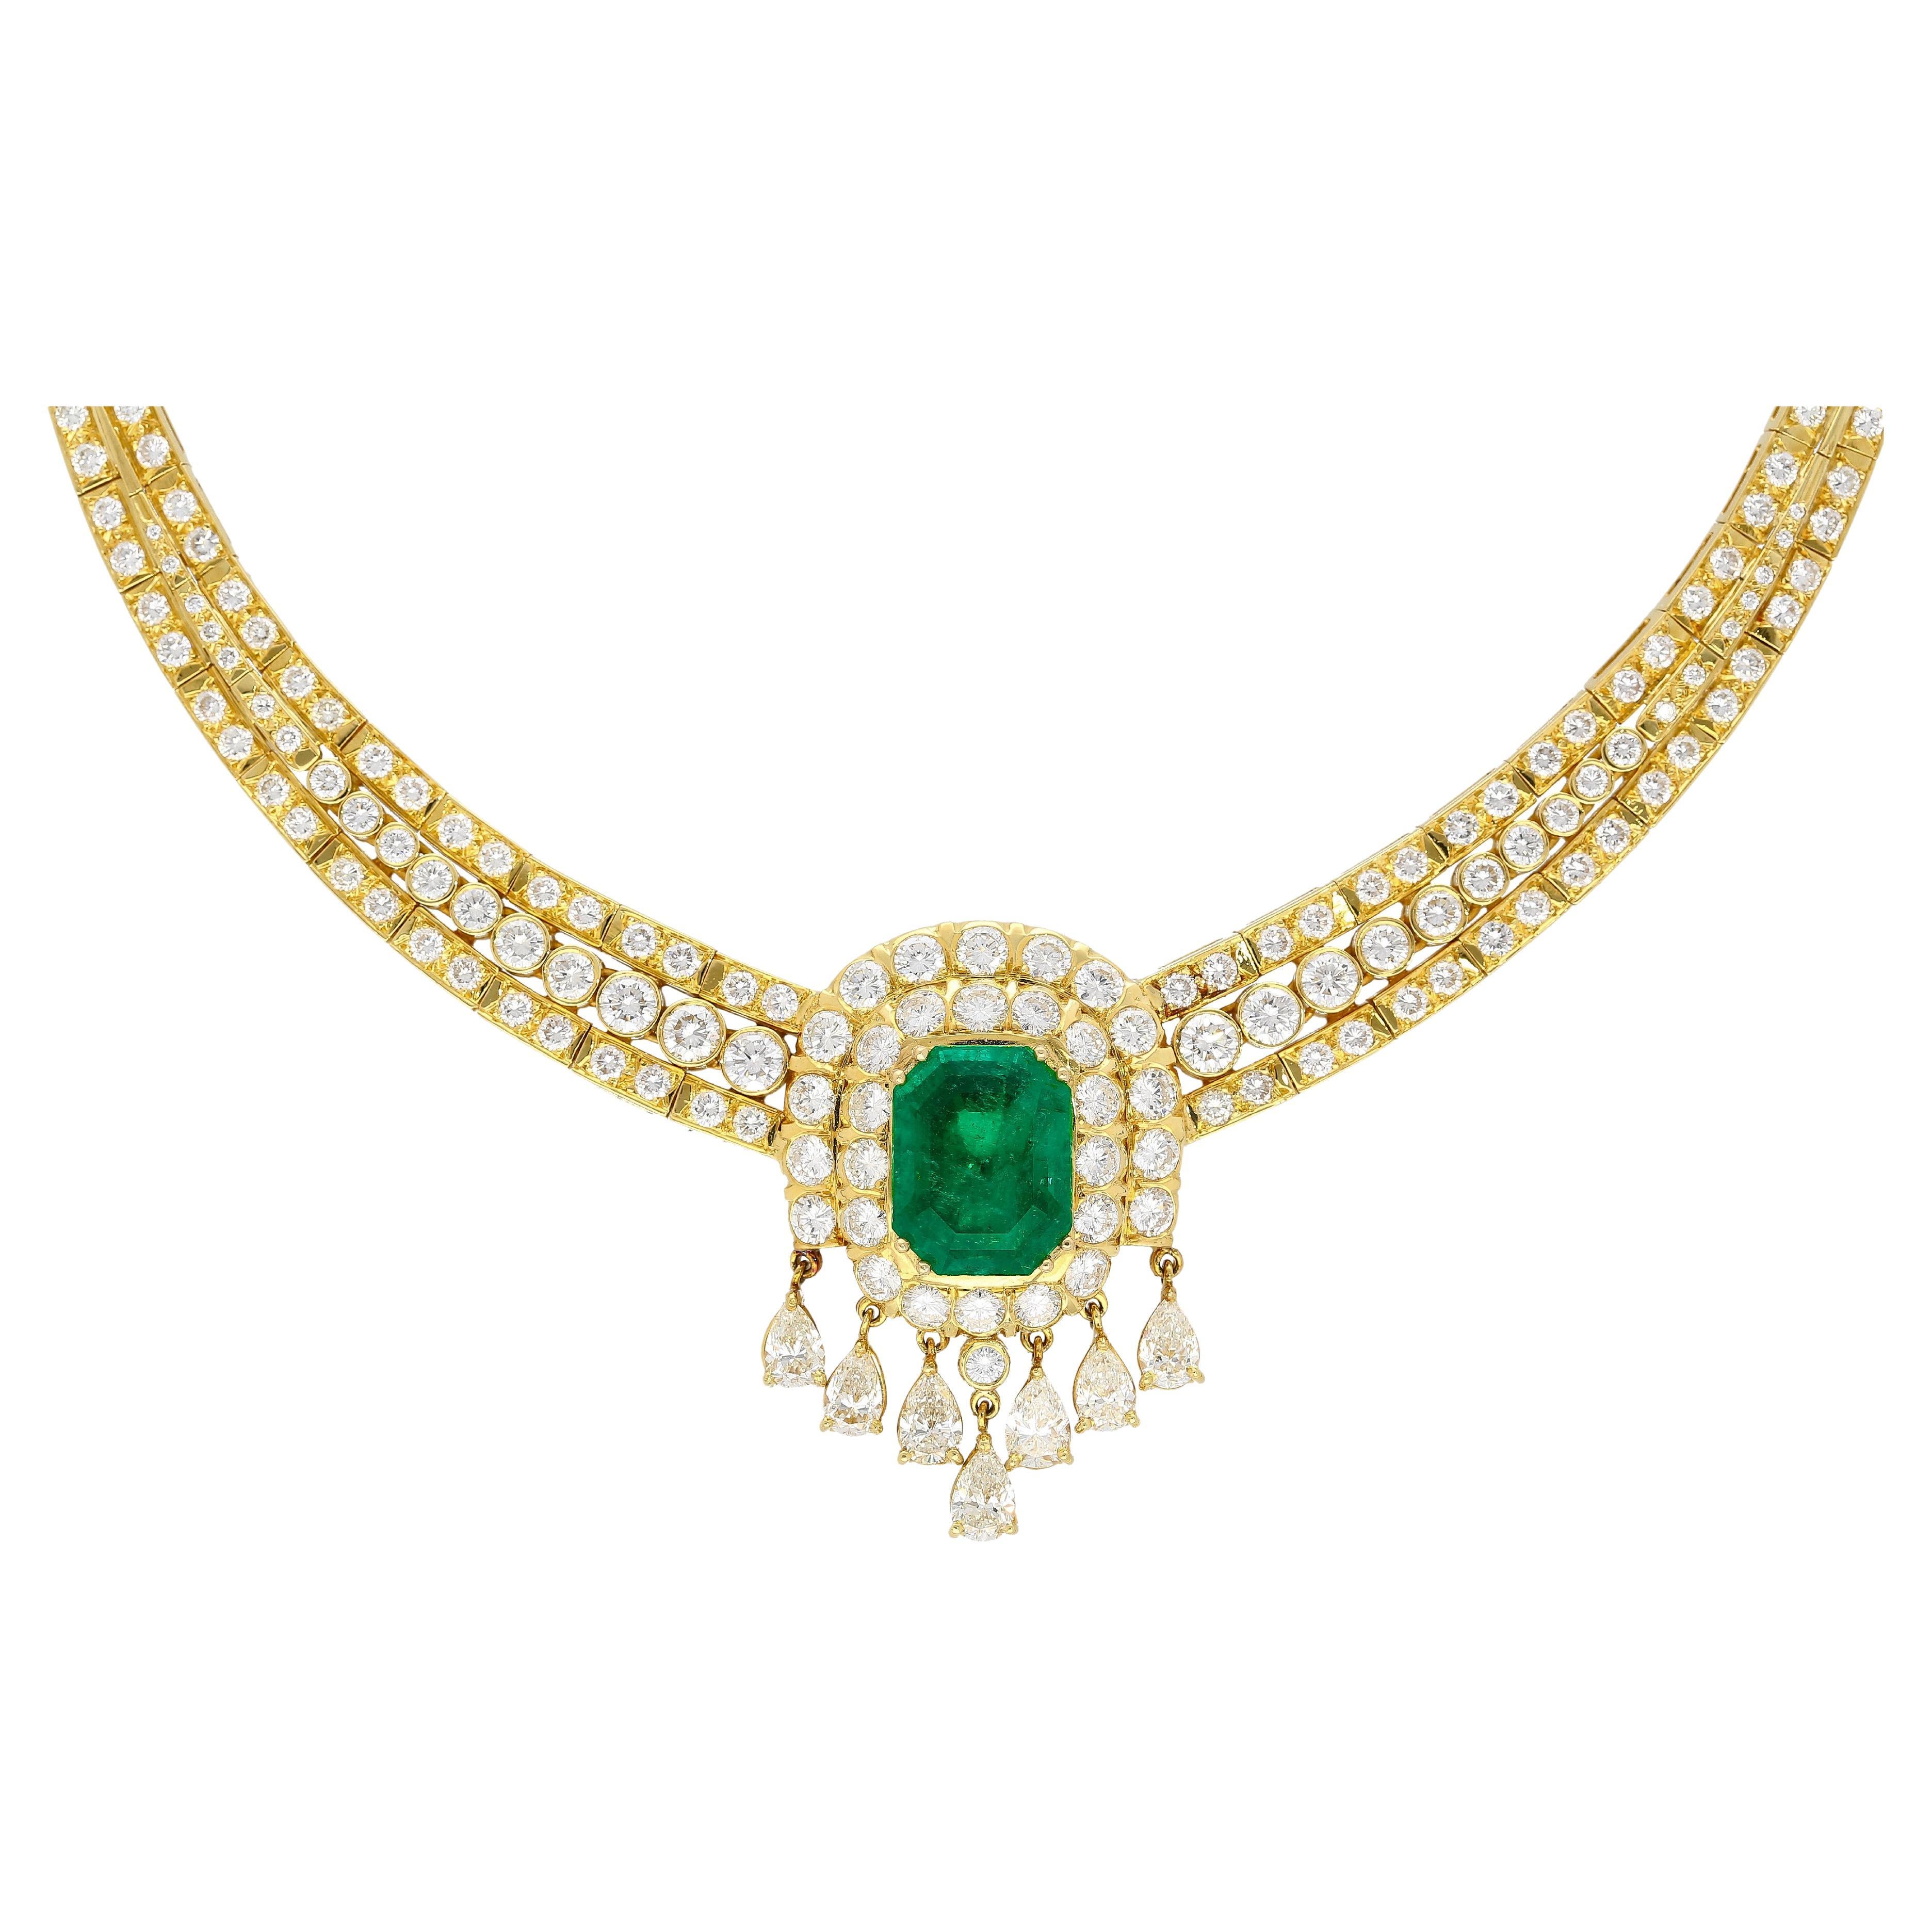 27 Karat kolumbianischer Smaragd & Diamant-Kronleuchter Regal Choker Halskette in 18k